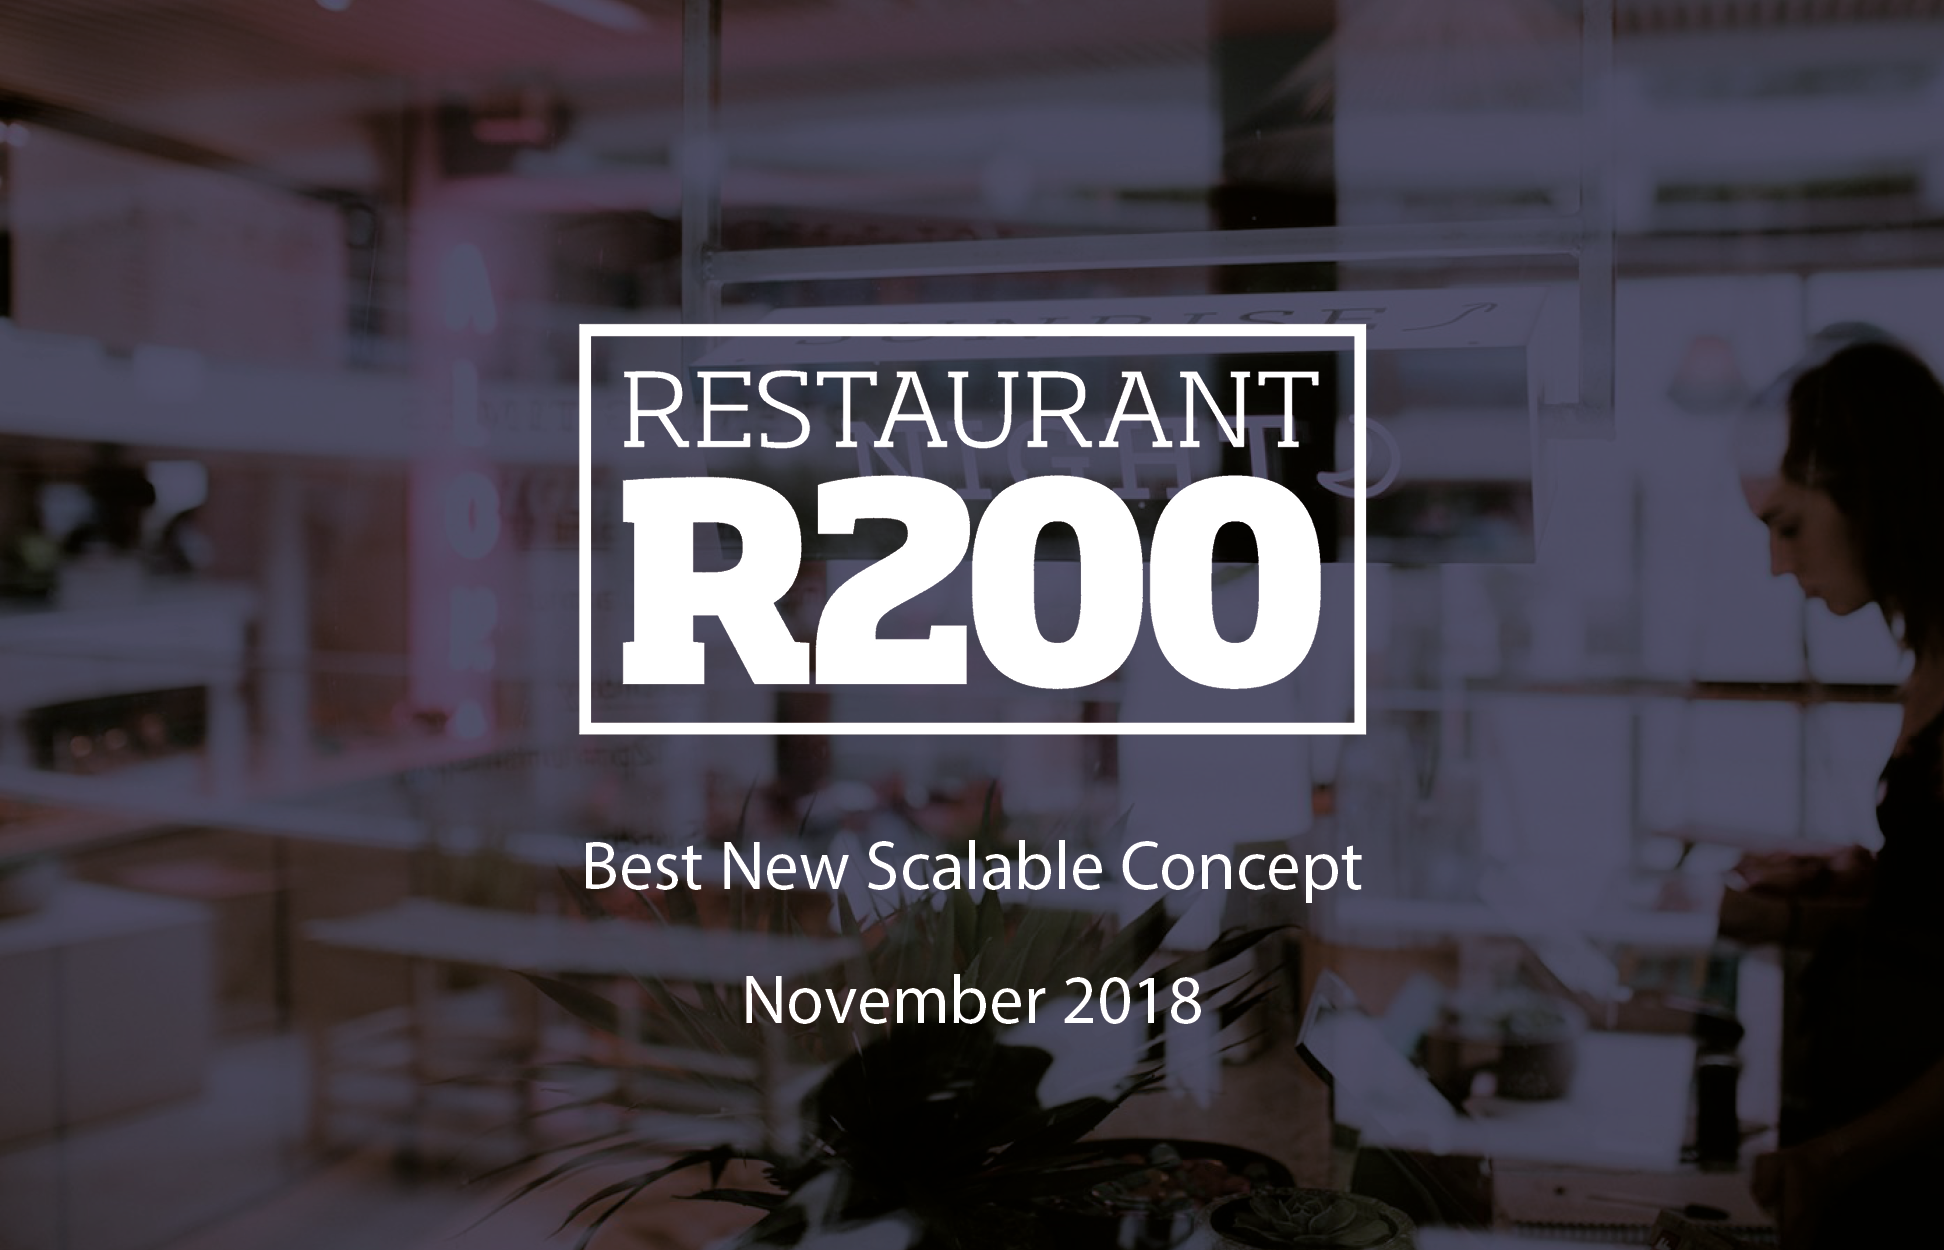 Restaurant R200 In the Press